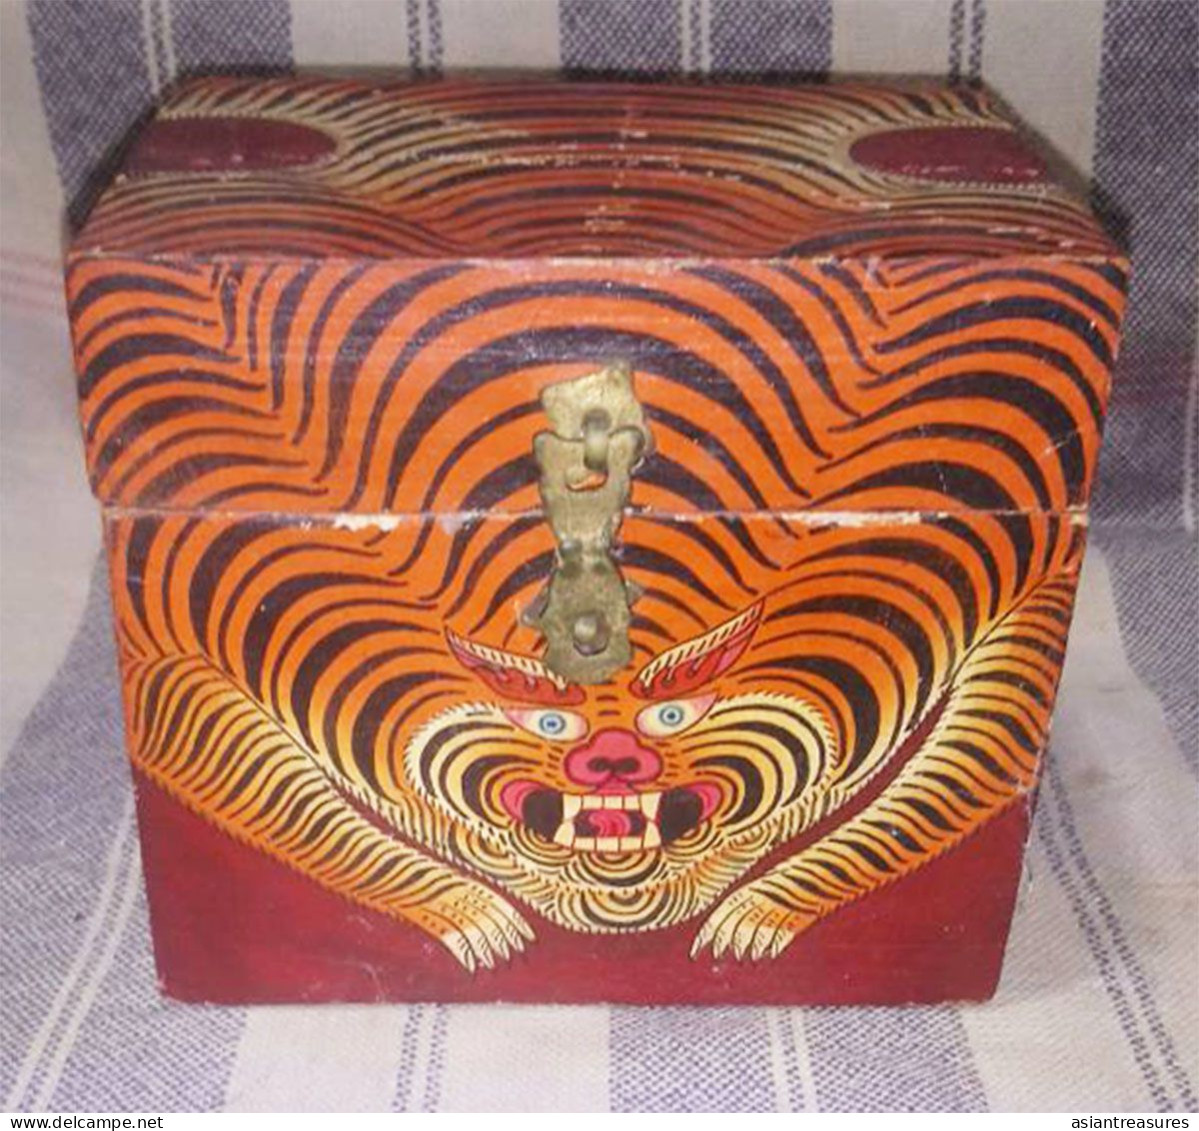 Antique Tibet Treasure Box With Tiger Design Intricate Work - Asian Art